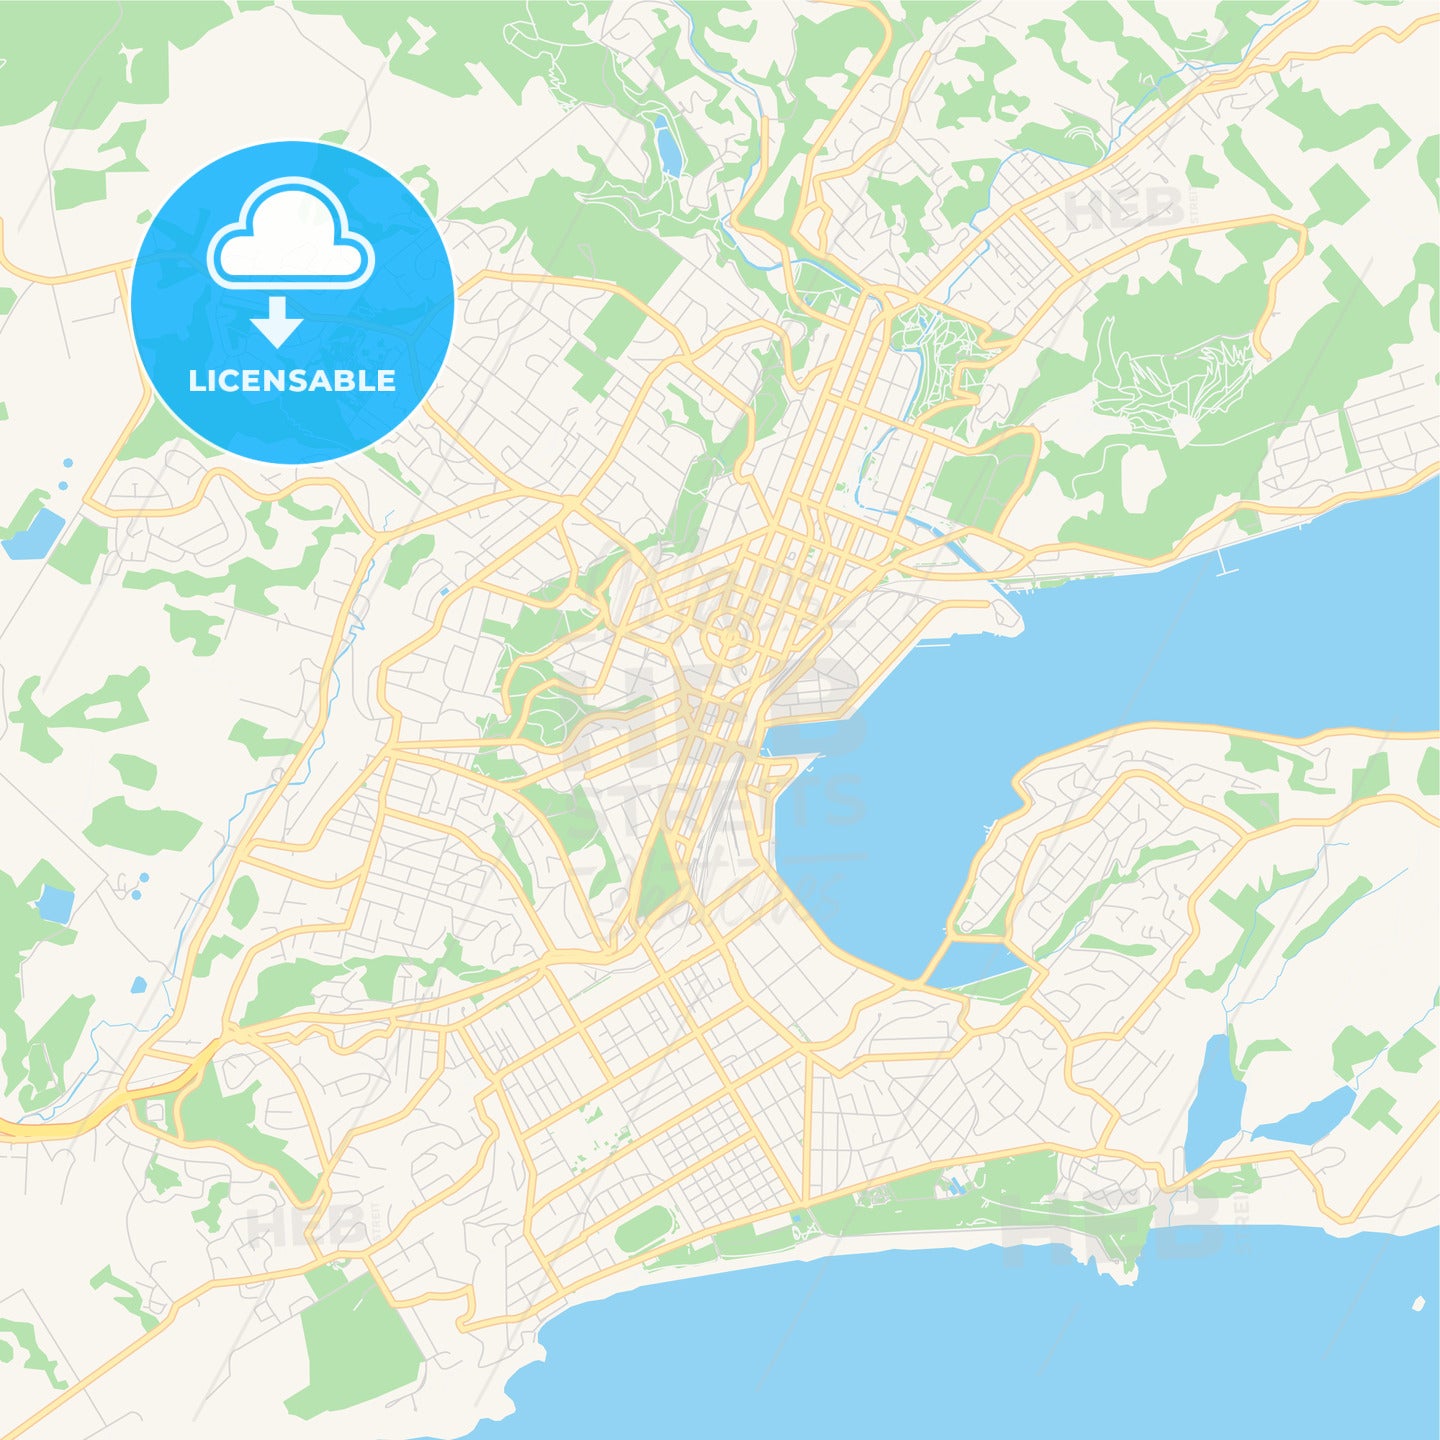 Printable street map of Dunedin, New Zealand